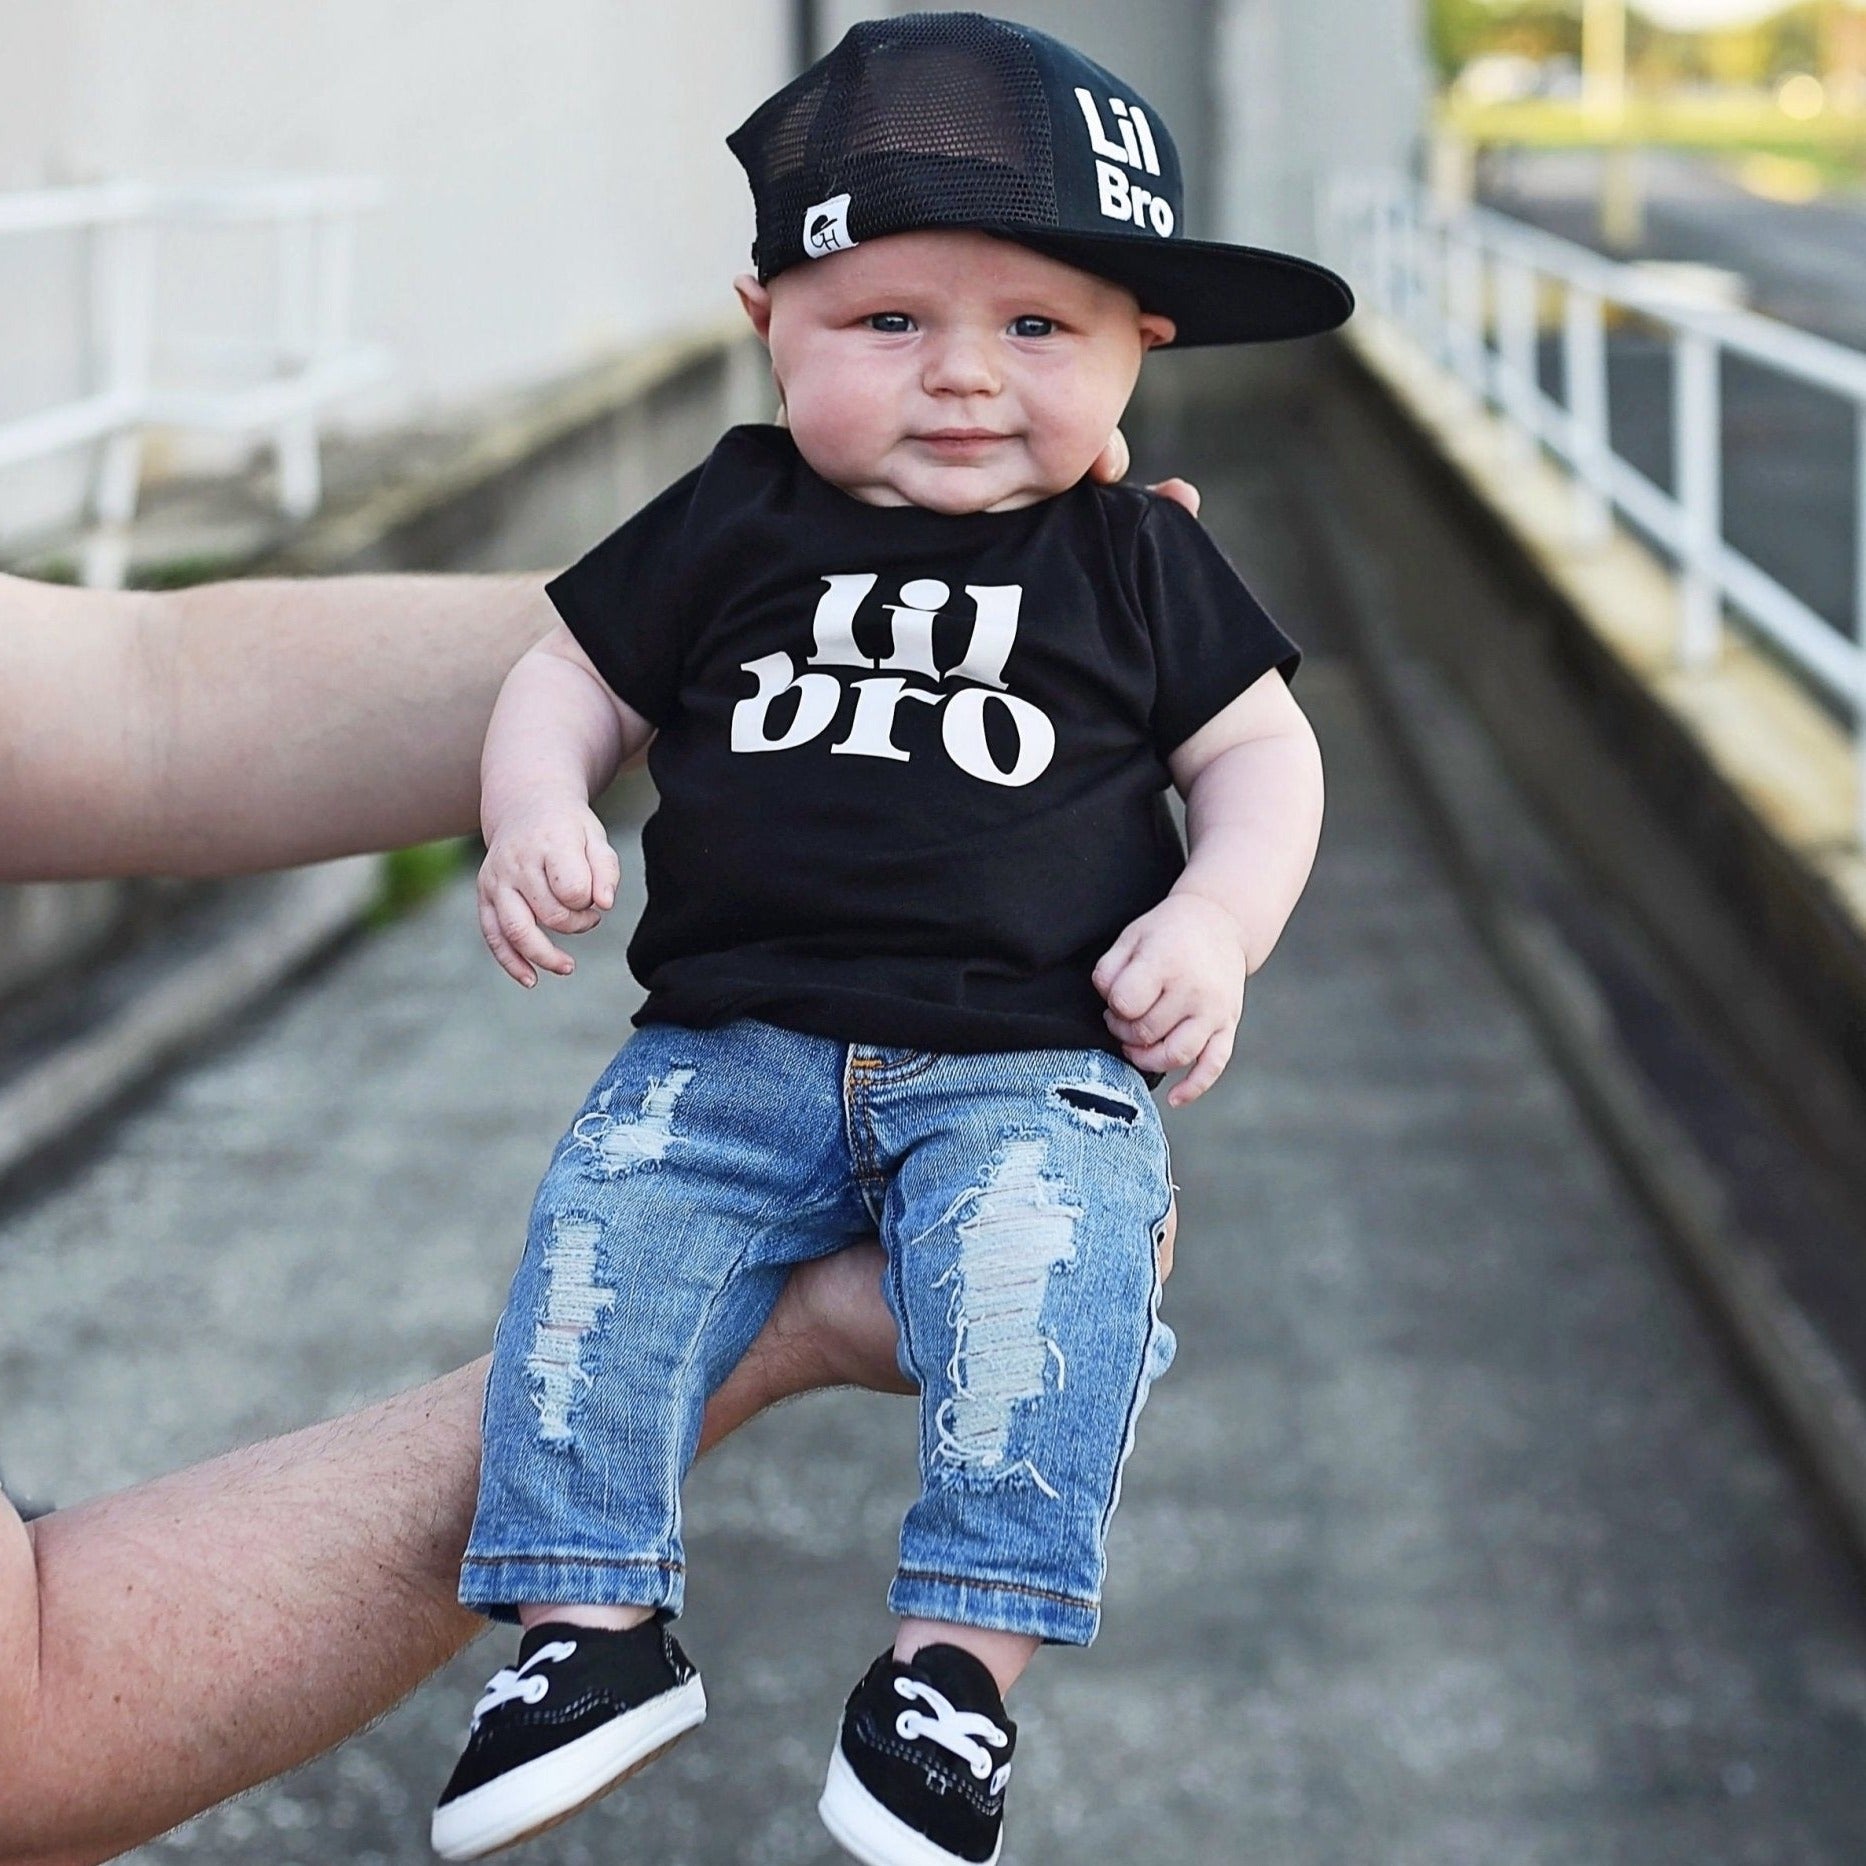 LIL Bro Trucker infant snapback hat - George Hats